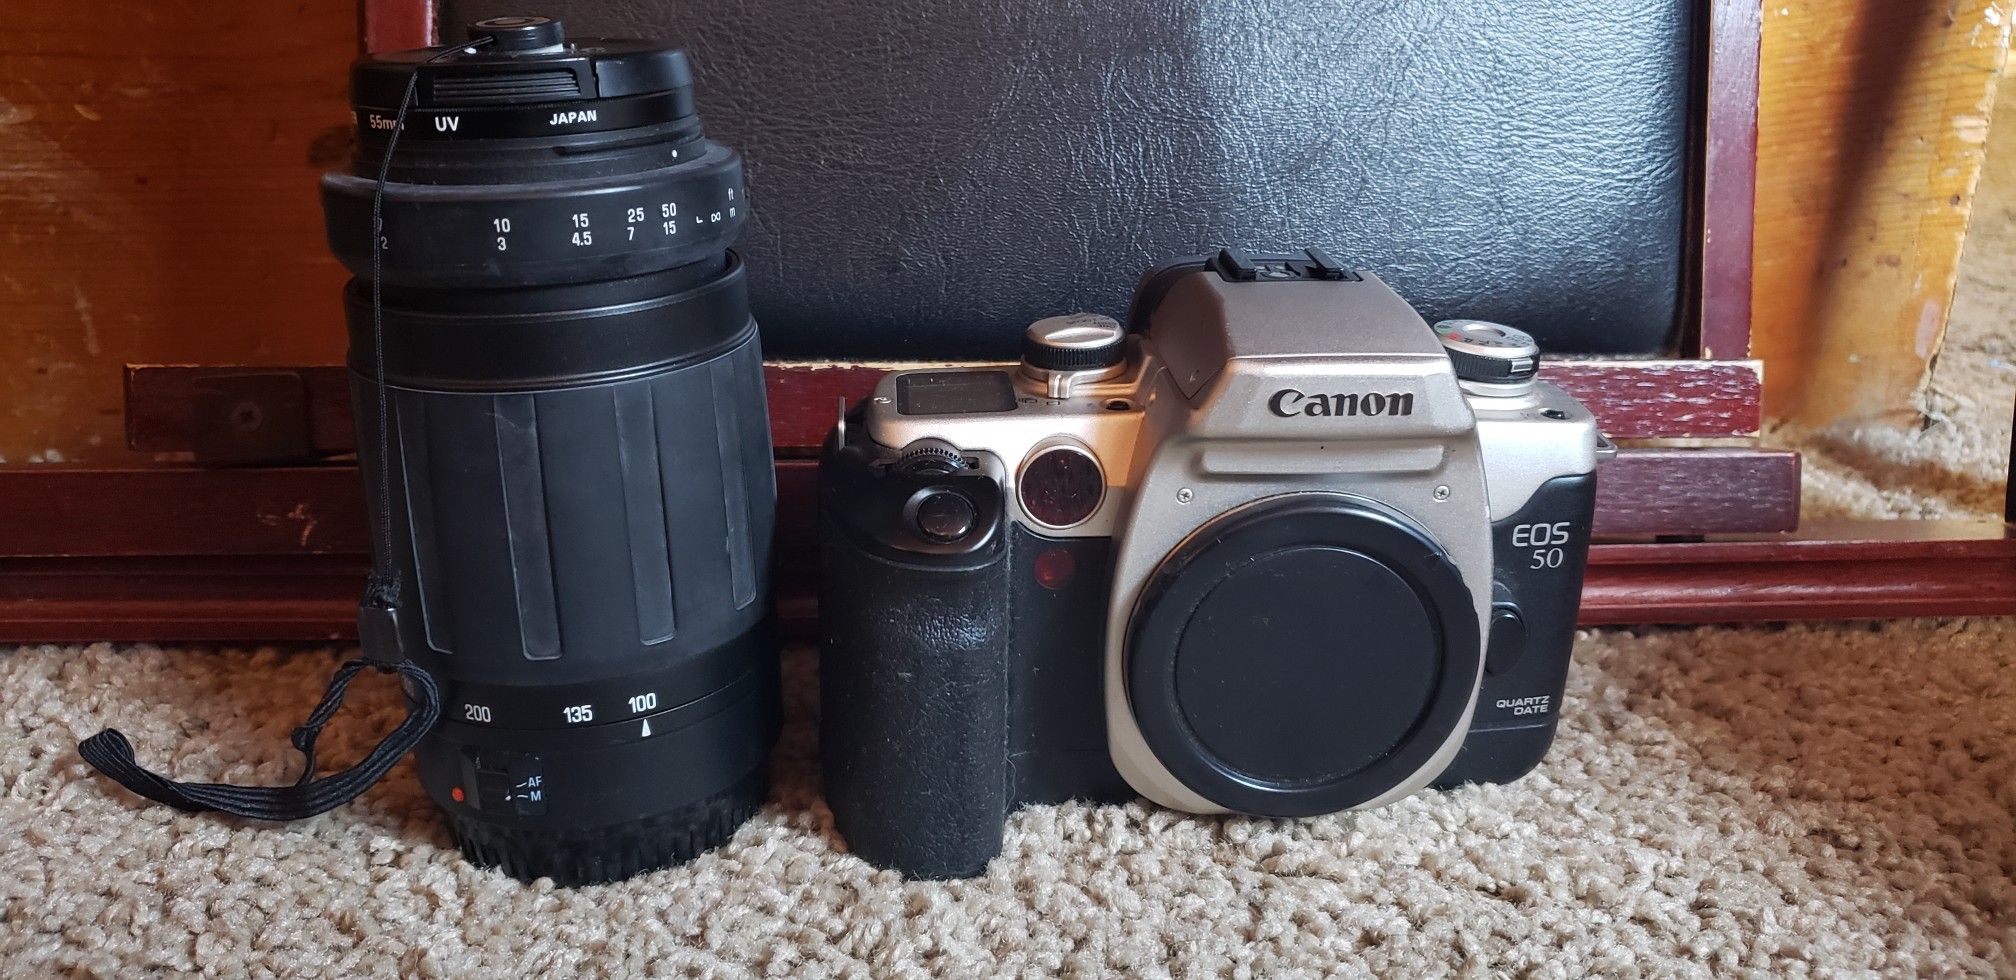 Canon EOS 50 camera and lens